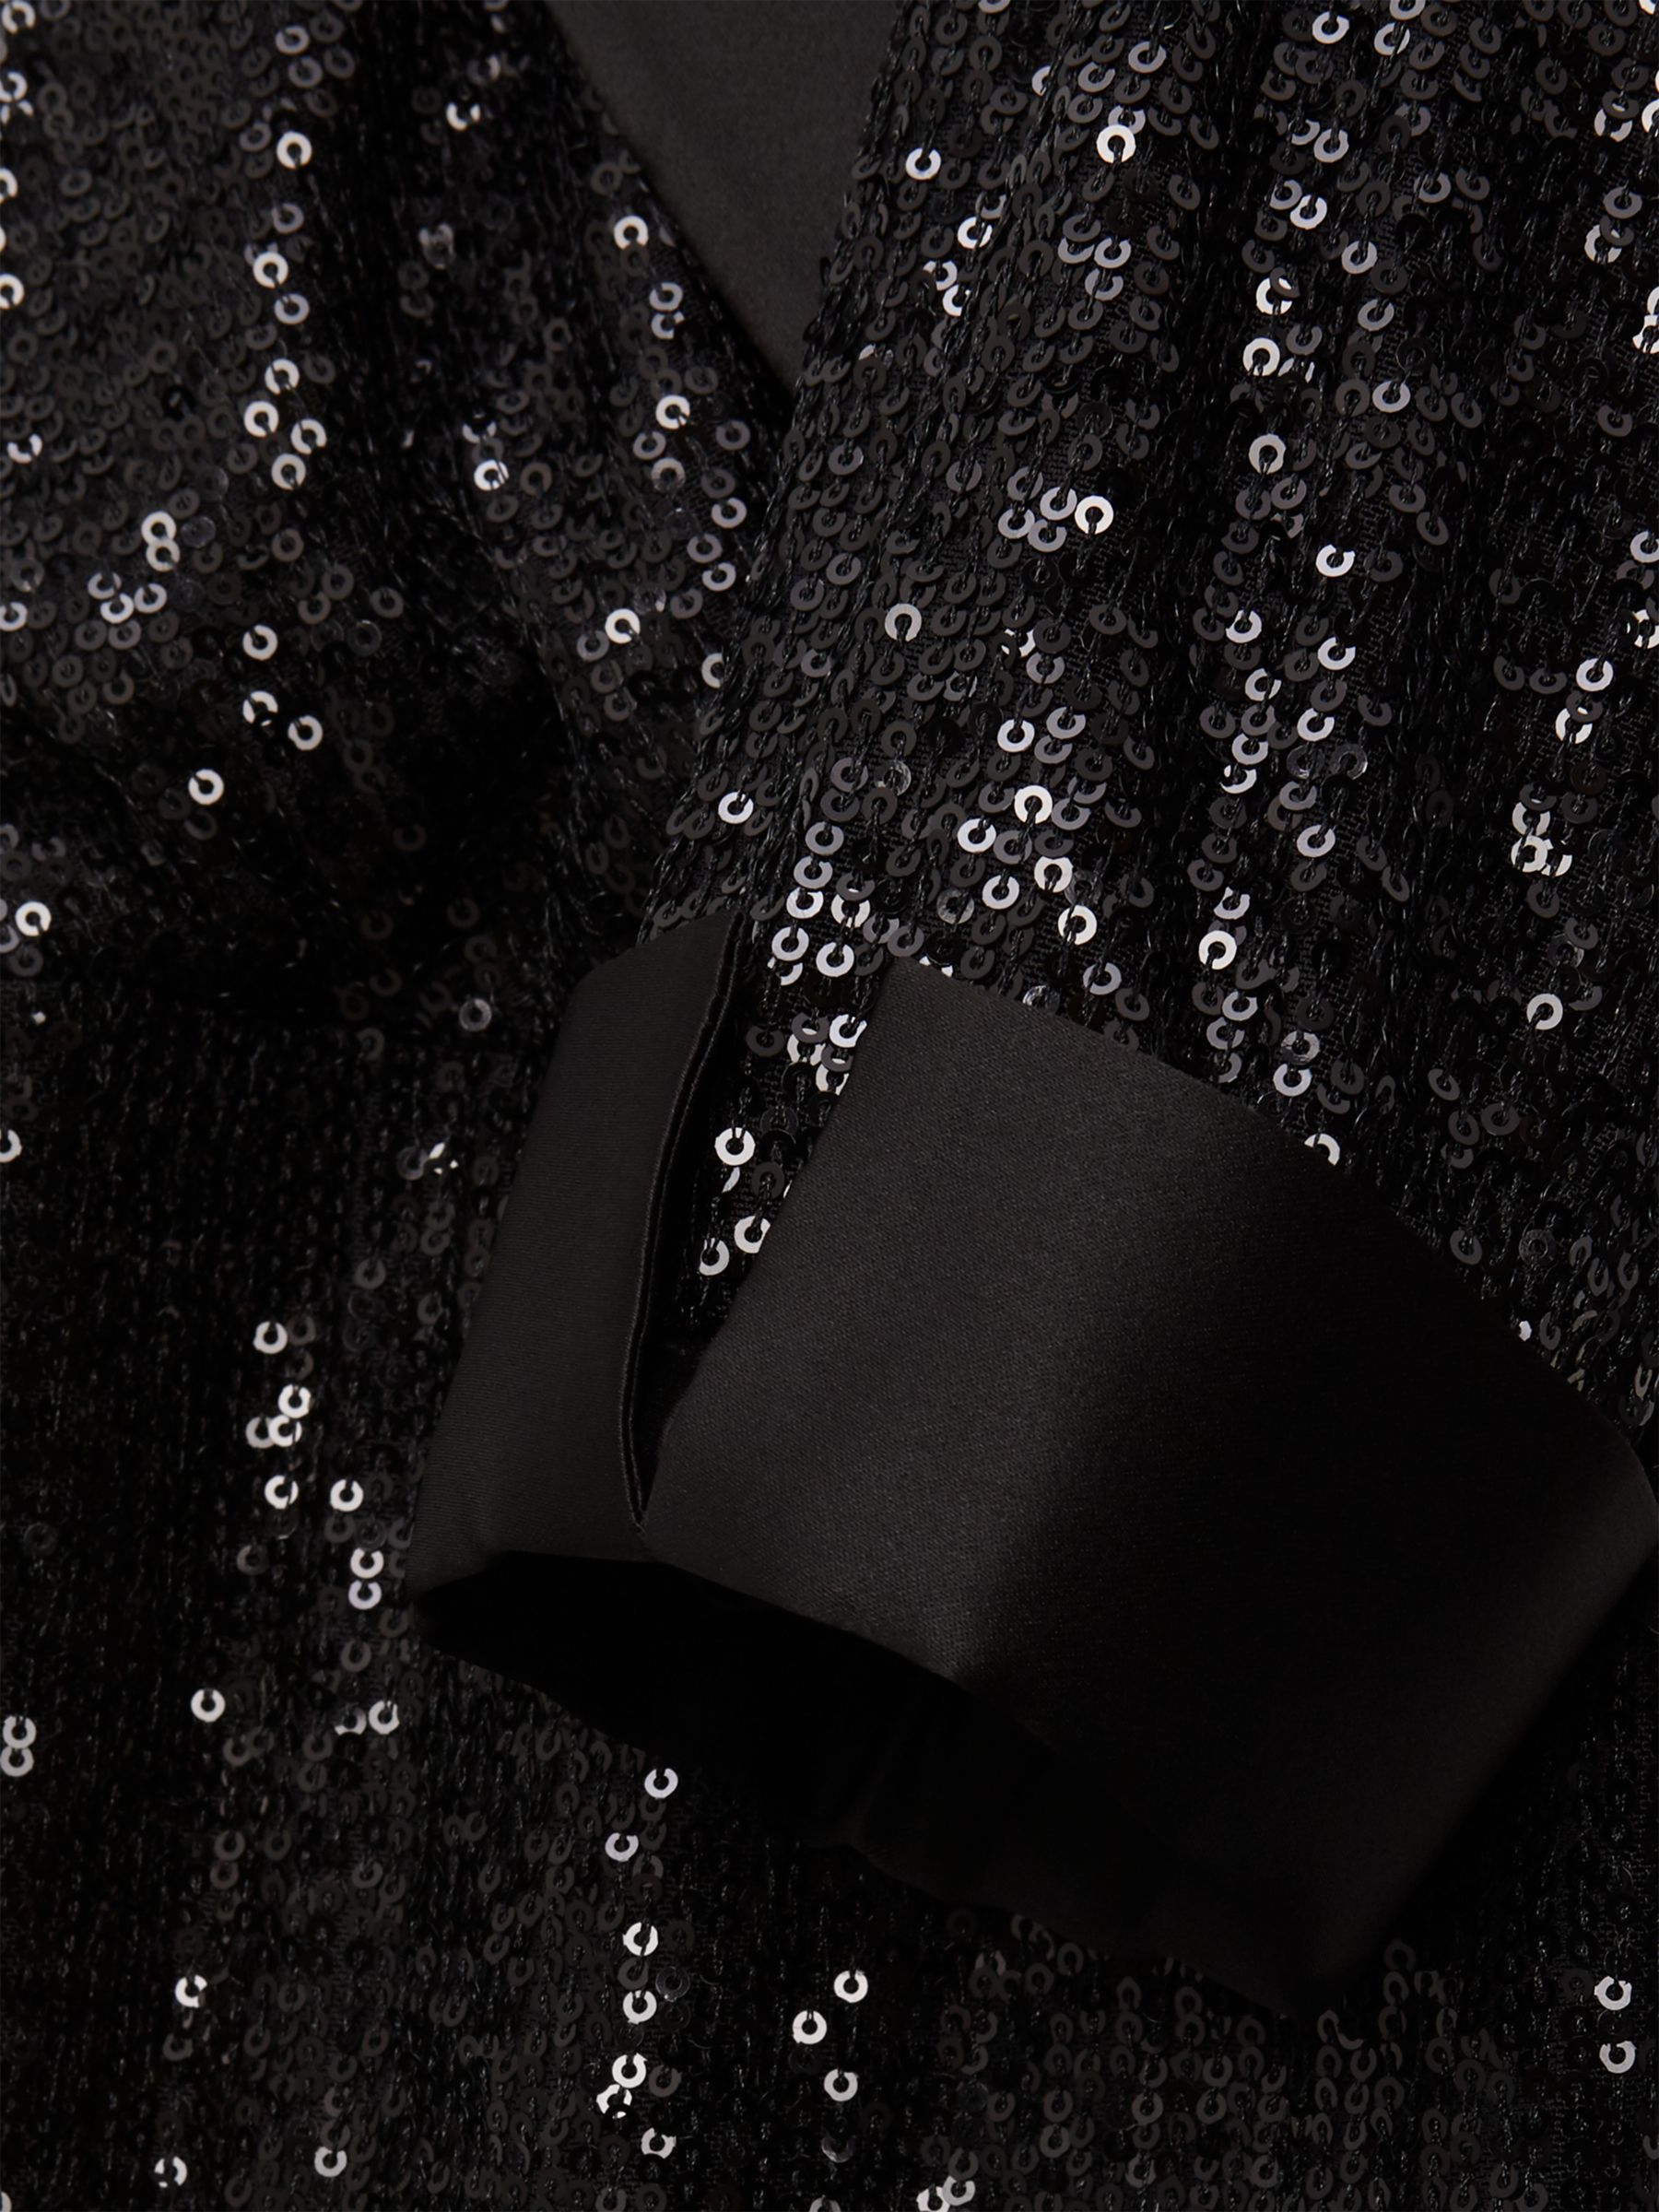 Buy Hobbs Carys Sequin Blazer Dress, Black Online at johnlewis.com